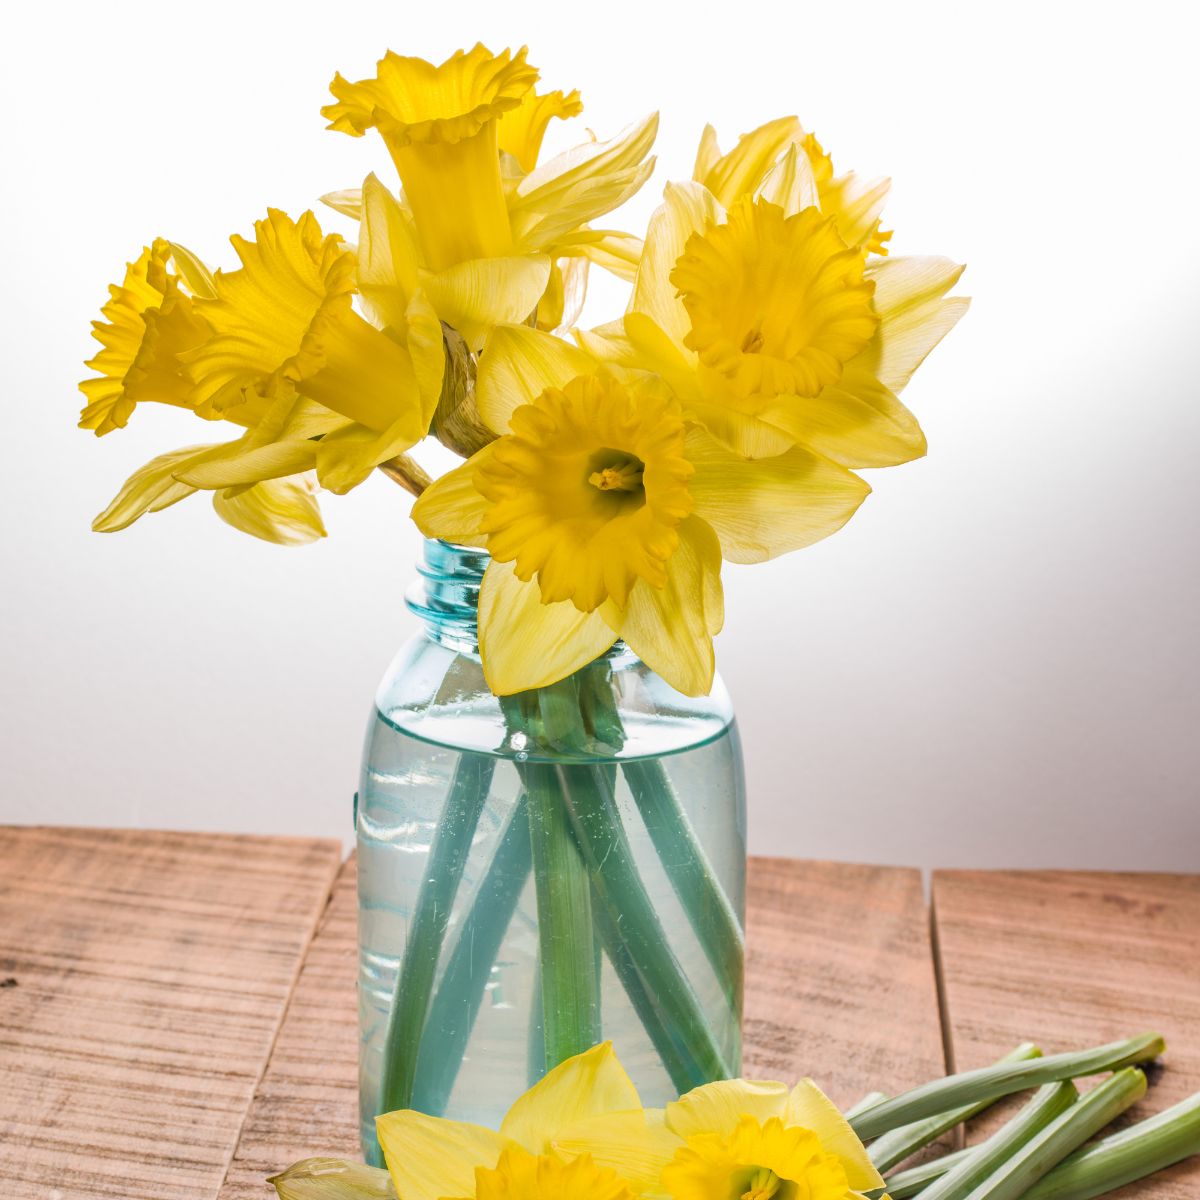 How to Make Easy Daffodil Flower Arrangements